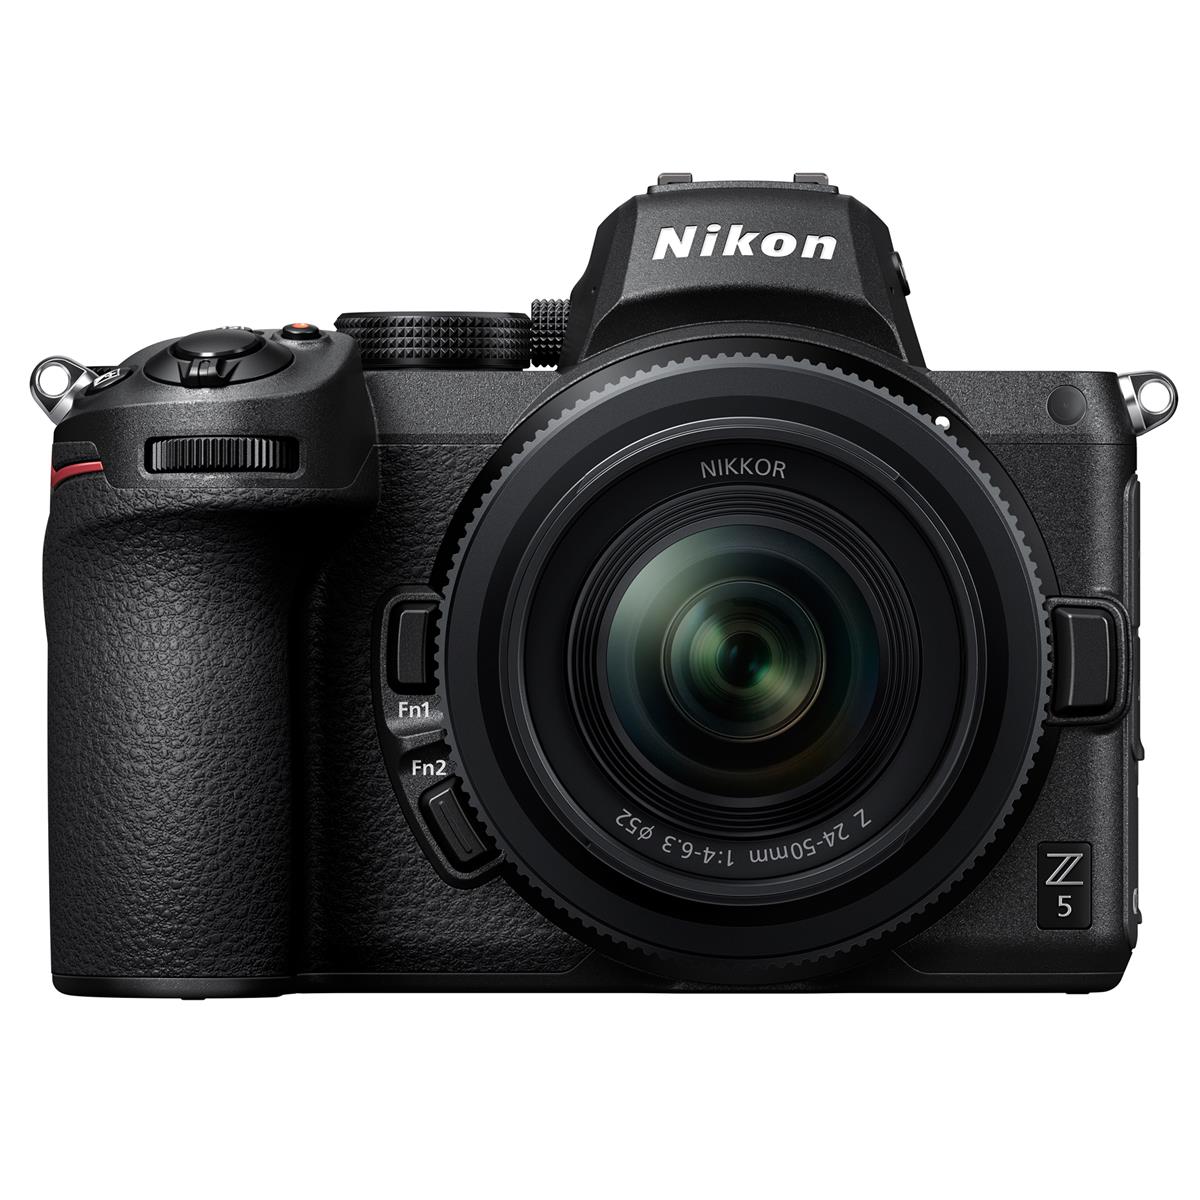 Nikon Z5 Full Frame Mirrorless Camera with NIKKOR Z 24-50mm f/4-6.3 Lens